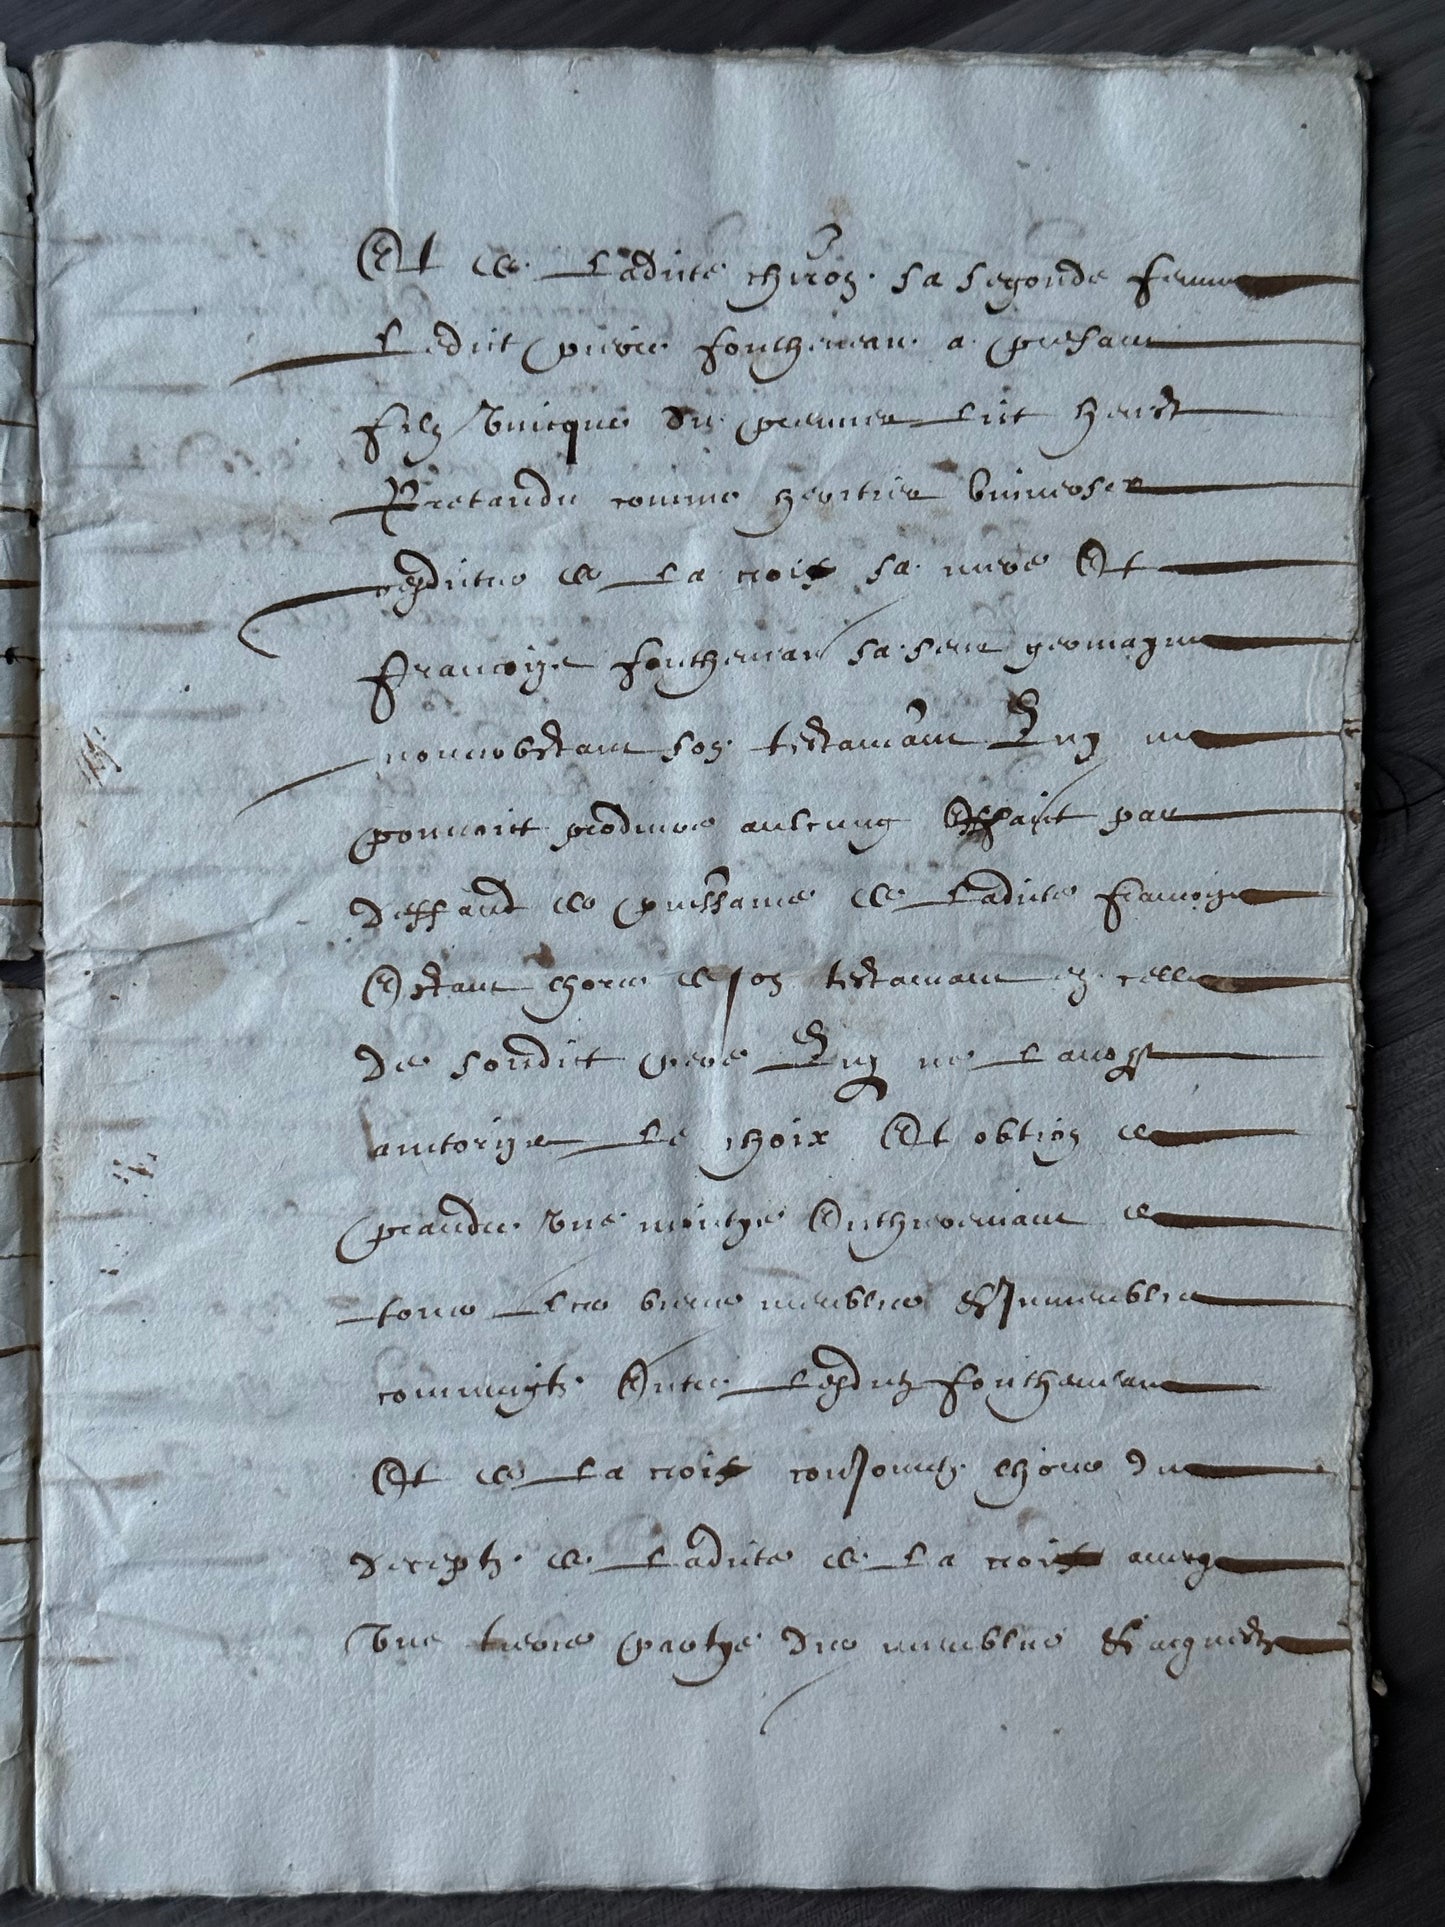 1637 French Manuscript